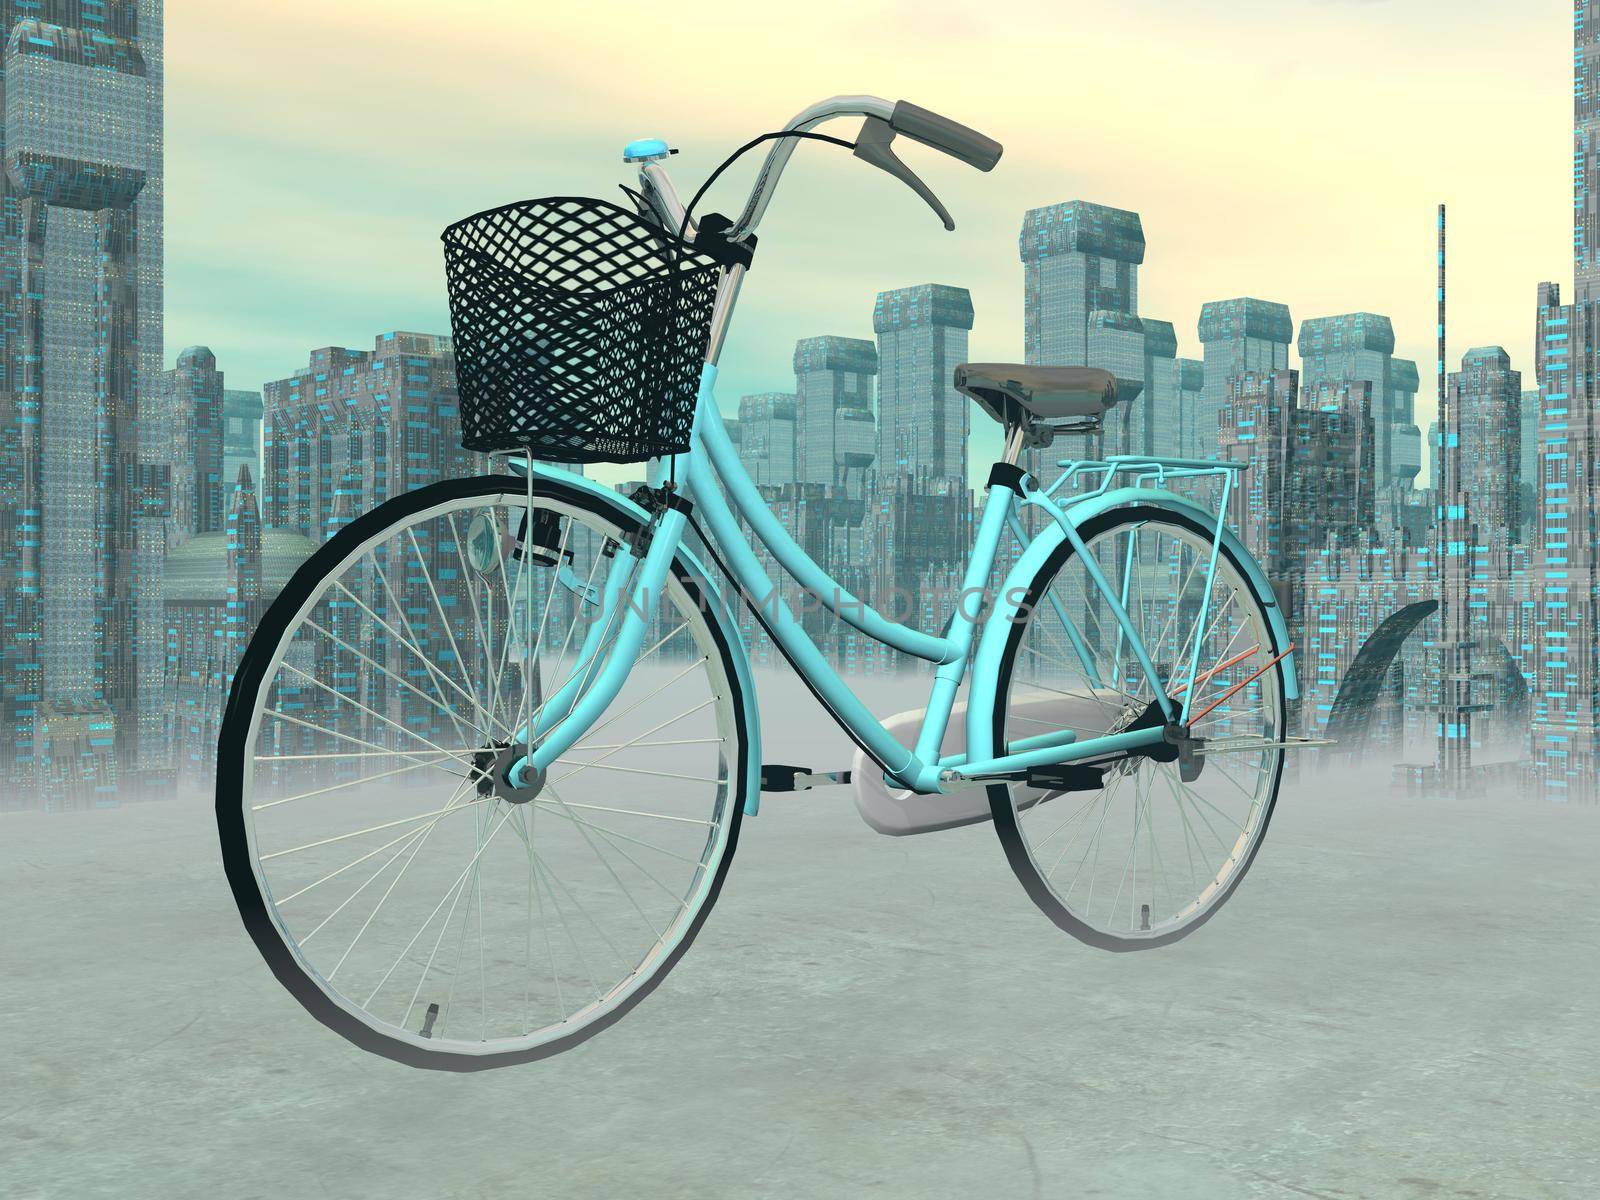 City bike - 3D render by Elenaphotos21